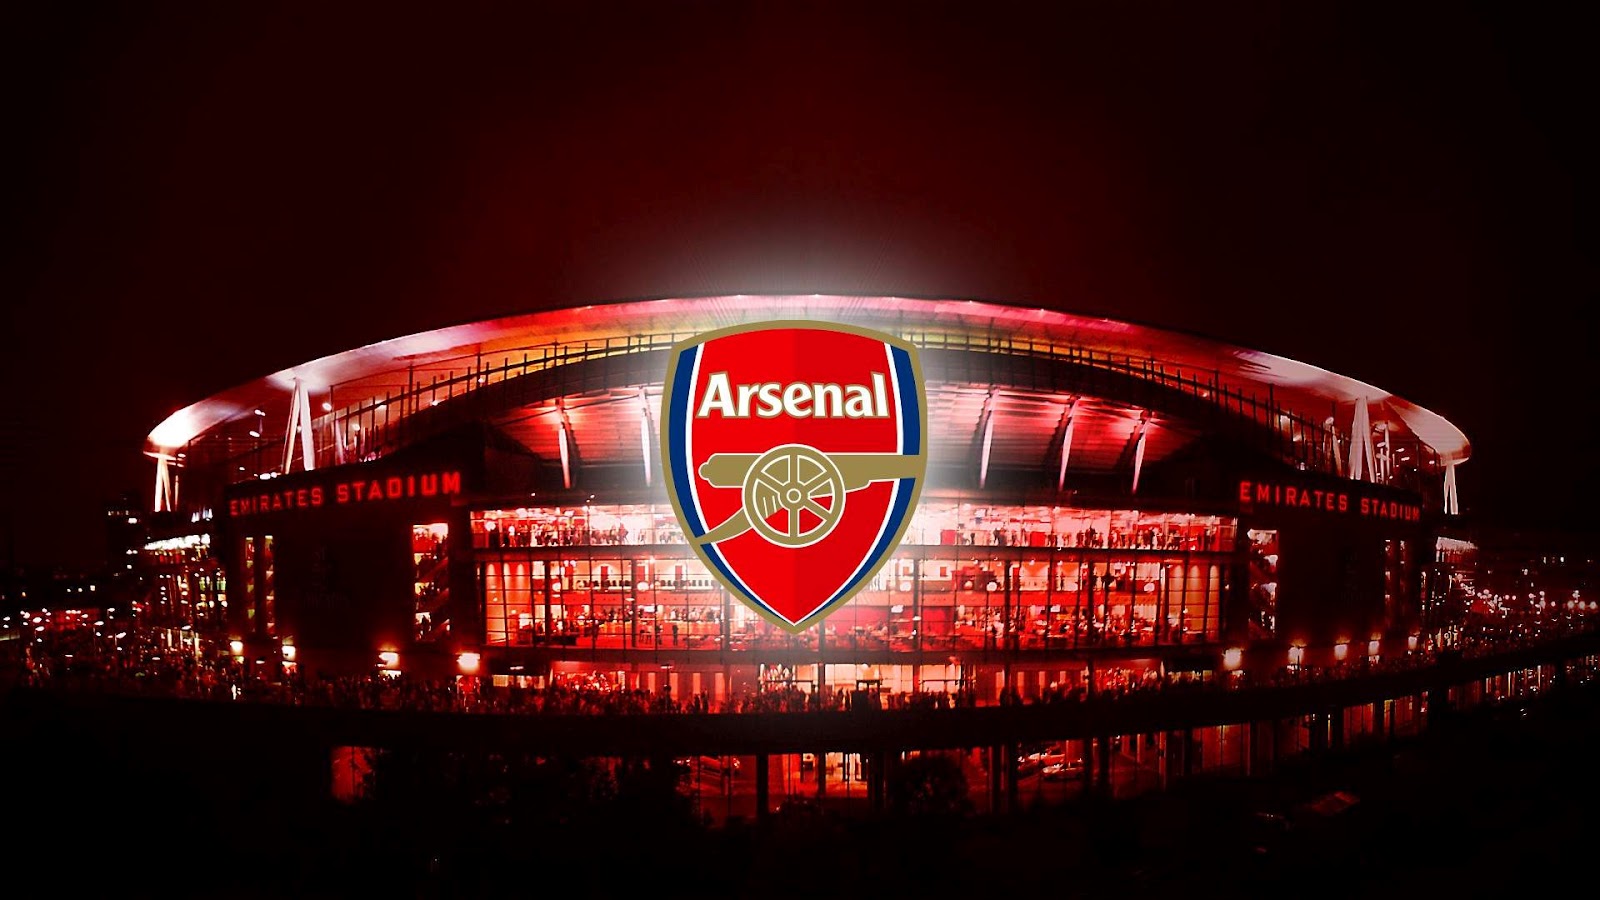  Beautiful Arsenal Logo And Emirates Stadium Image HD Wallpapers 2014 1600x900